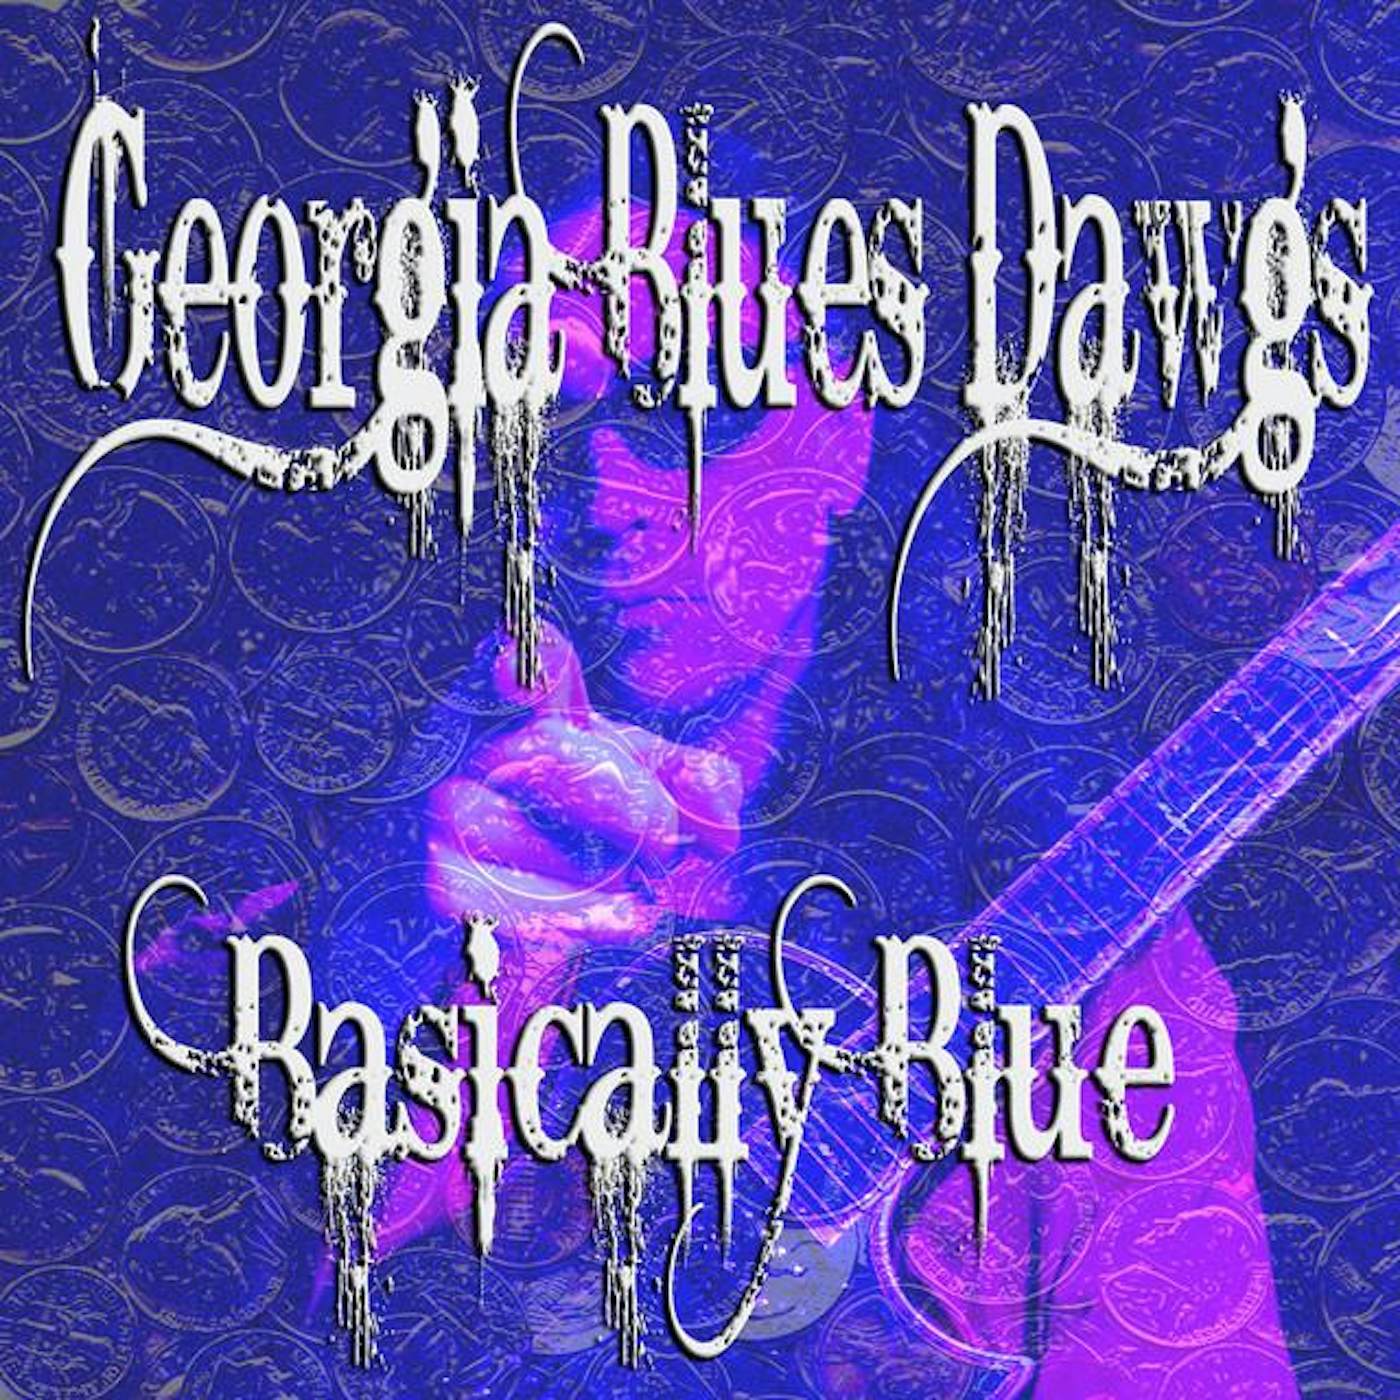 Georgia Blues Dawgs